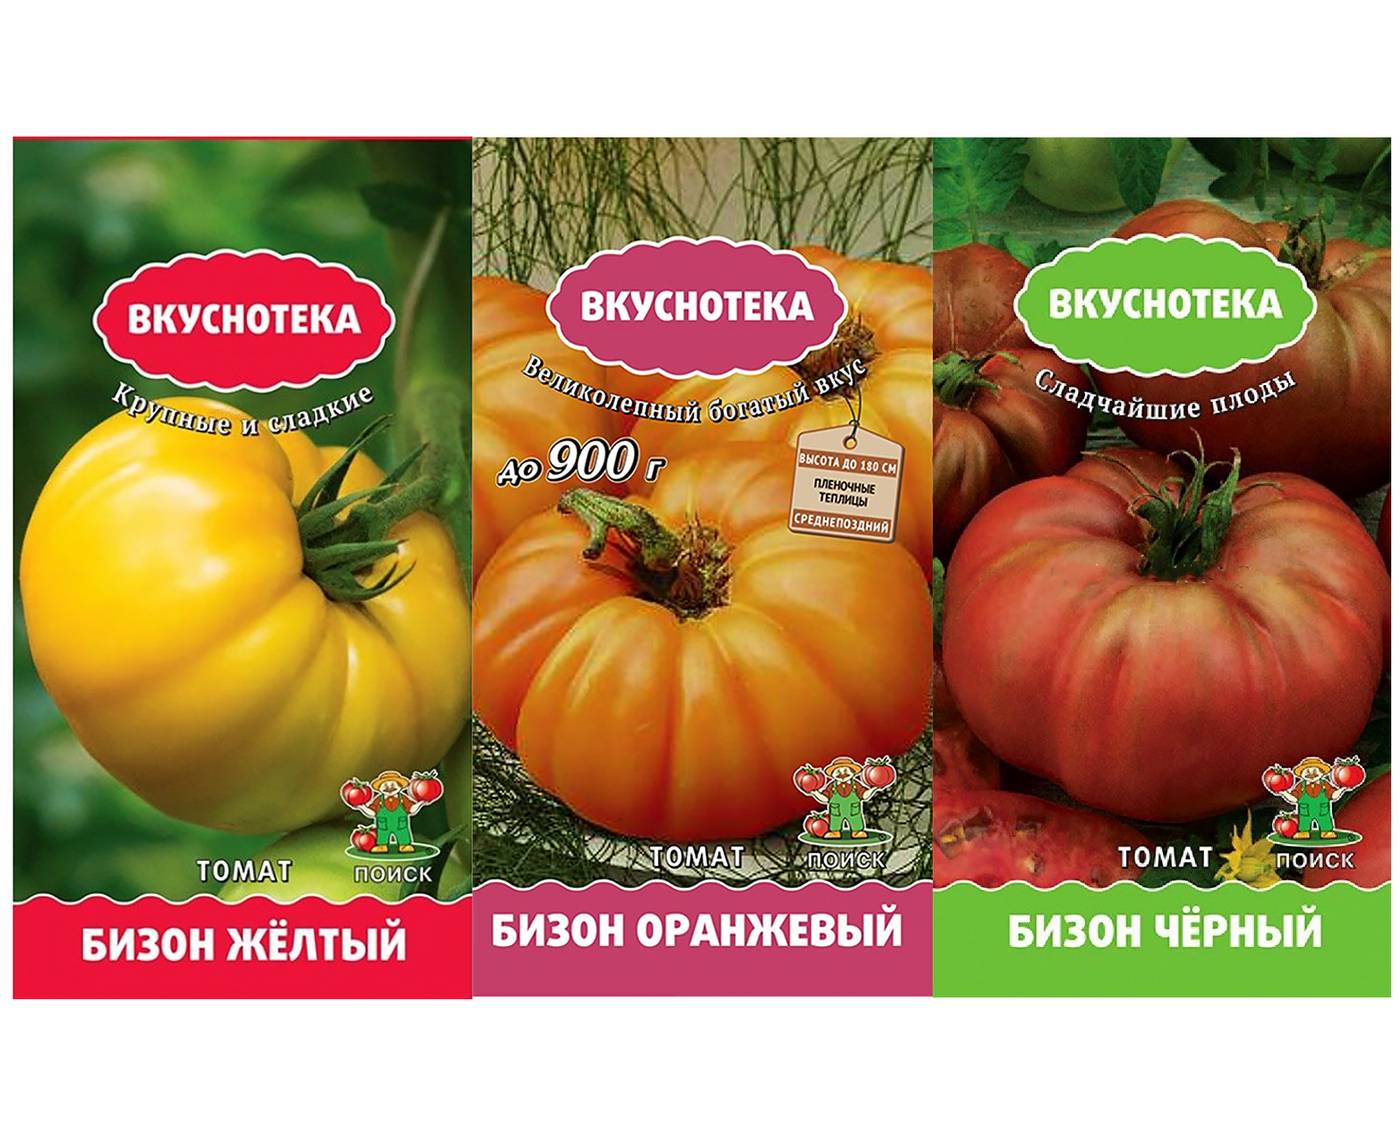 Описание томата Бизон оранжевый, преимущества и агротехника выращивания